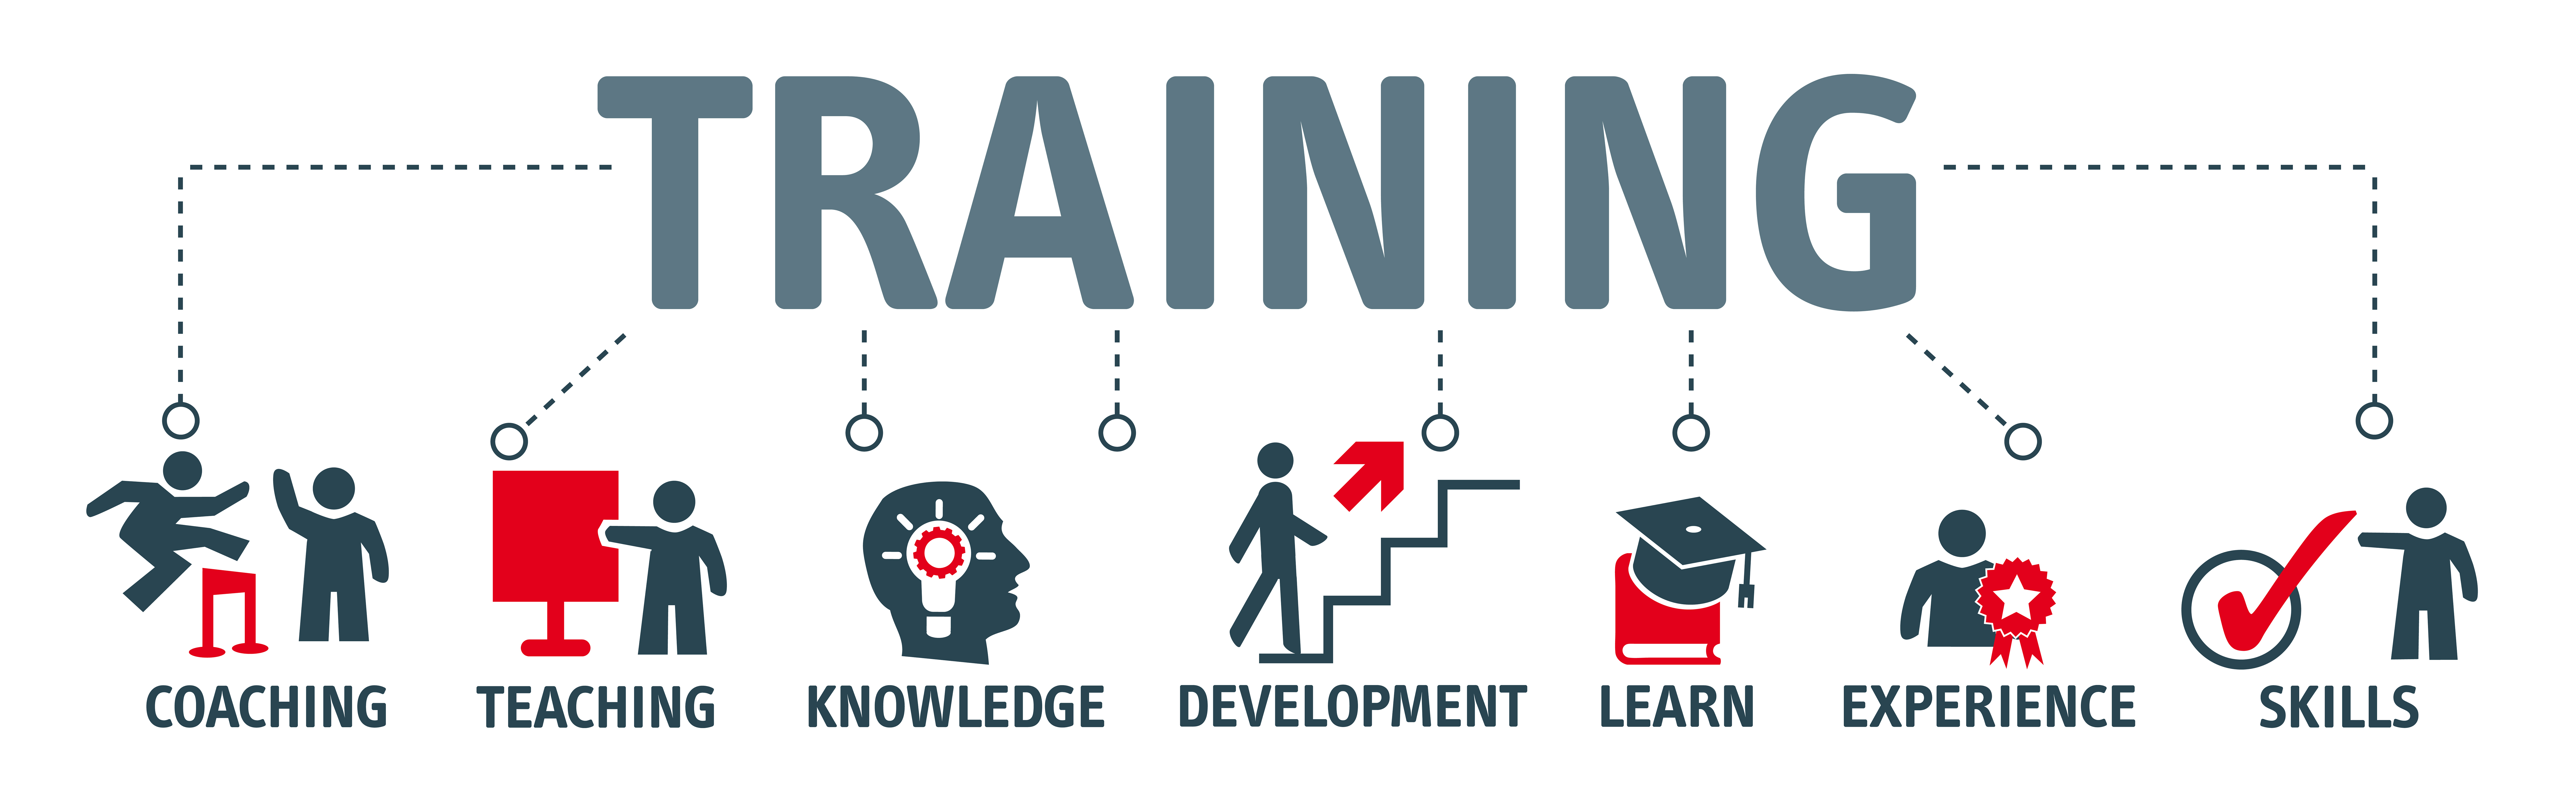 jobs training education